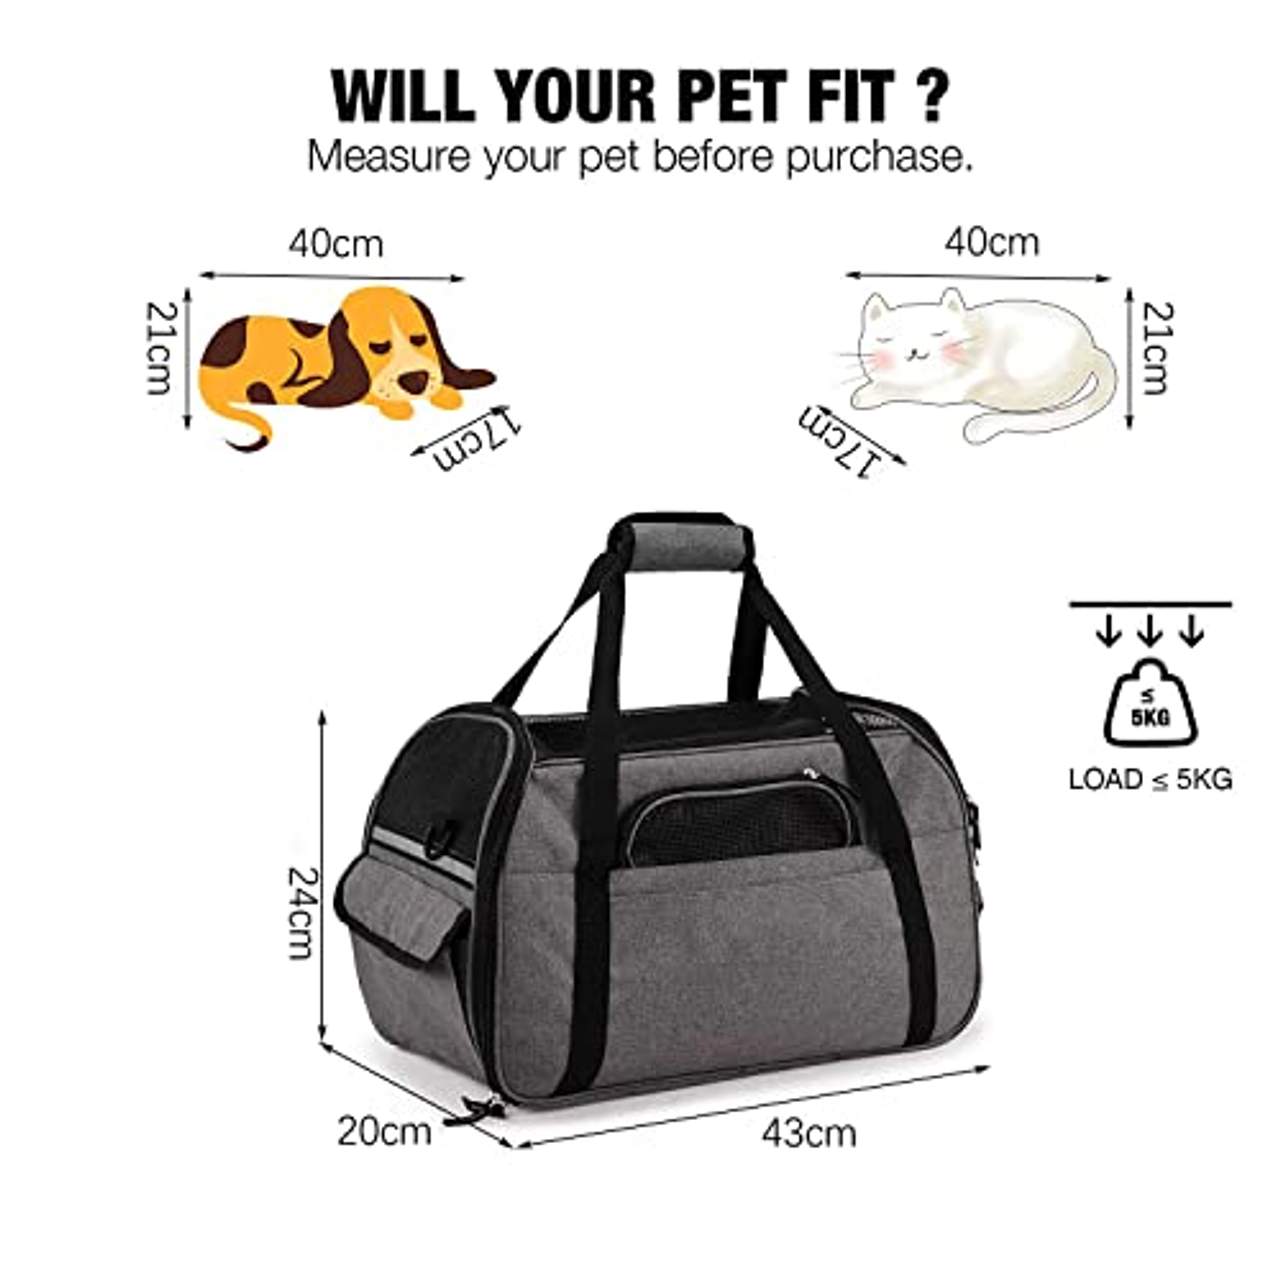 Kaka mall Transporttasche für Katzen Hunde Comfort Fluggesellschaft zugelassen Travel